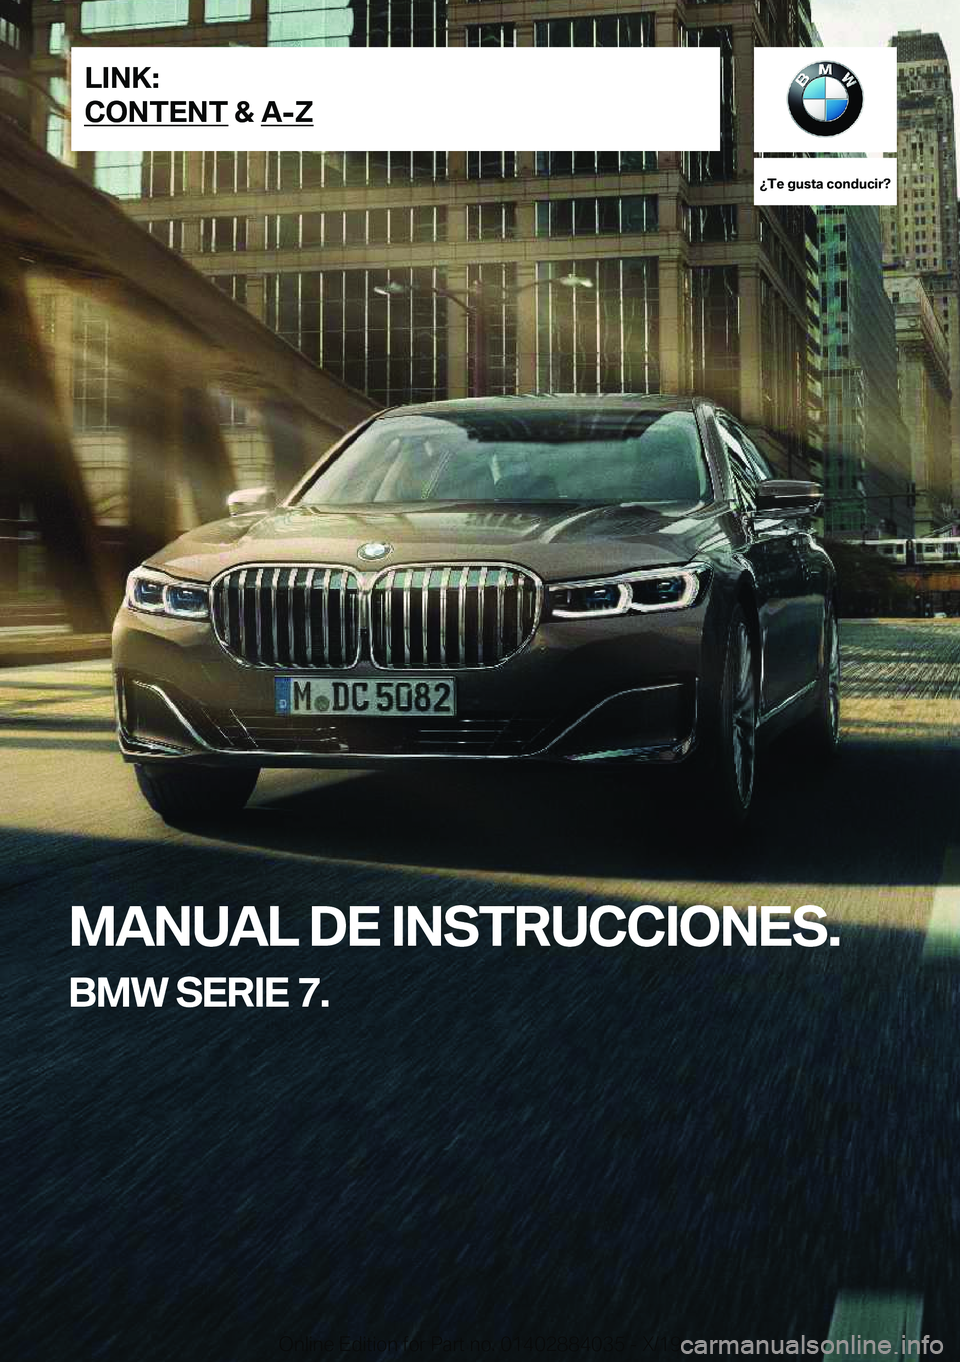 BMW 7 SERIES 2020  Manuales de Empleo (in Spanish) ��T�e��g�u�s�t�a��c�o�n�d�u�c�i�r� 
�M�A�N�U�A�L��D�E��I�N�S�T�R�U�C�C�I�O�N�E�S�.
�B�M�W��S�E�R�I�E��7�.�L�I�N�K�:
�C�O�N�T�E�N�T��&��A�-�Z�O�n�l�i�n�e��E�d�i�t�i�o�n��f�o�r��P�a�r�t��n�